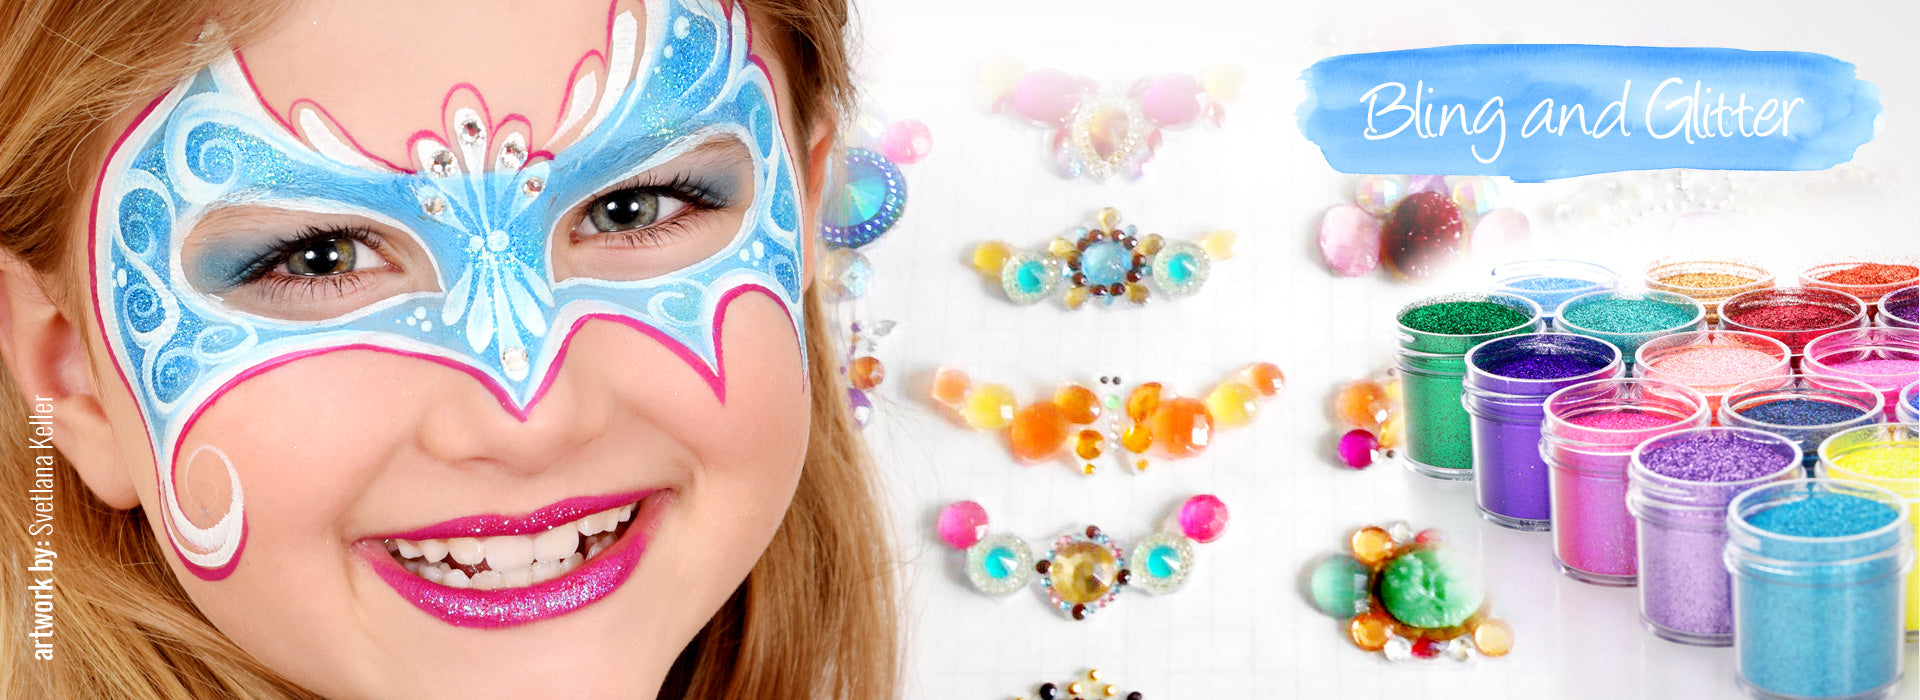 Bulk Glitter, Affordable Face Paint, Silly Farm Supplies